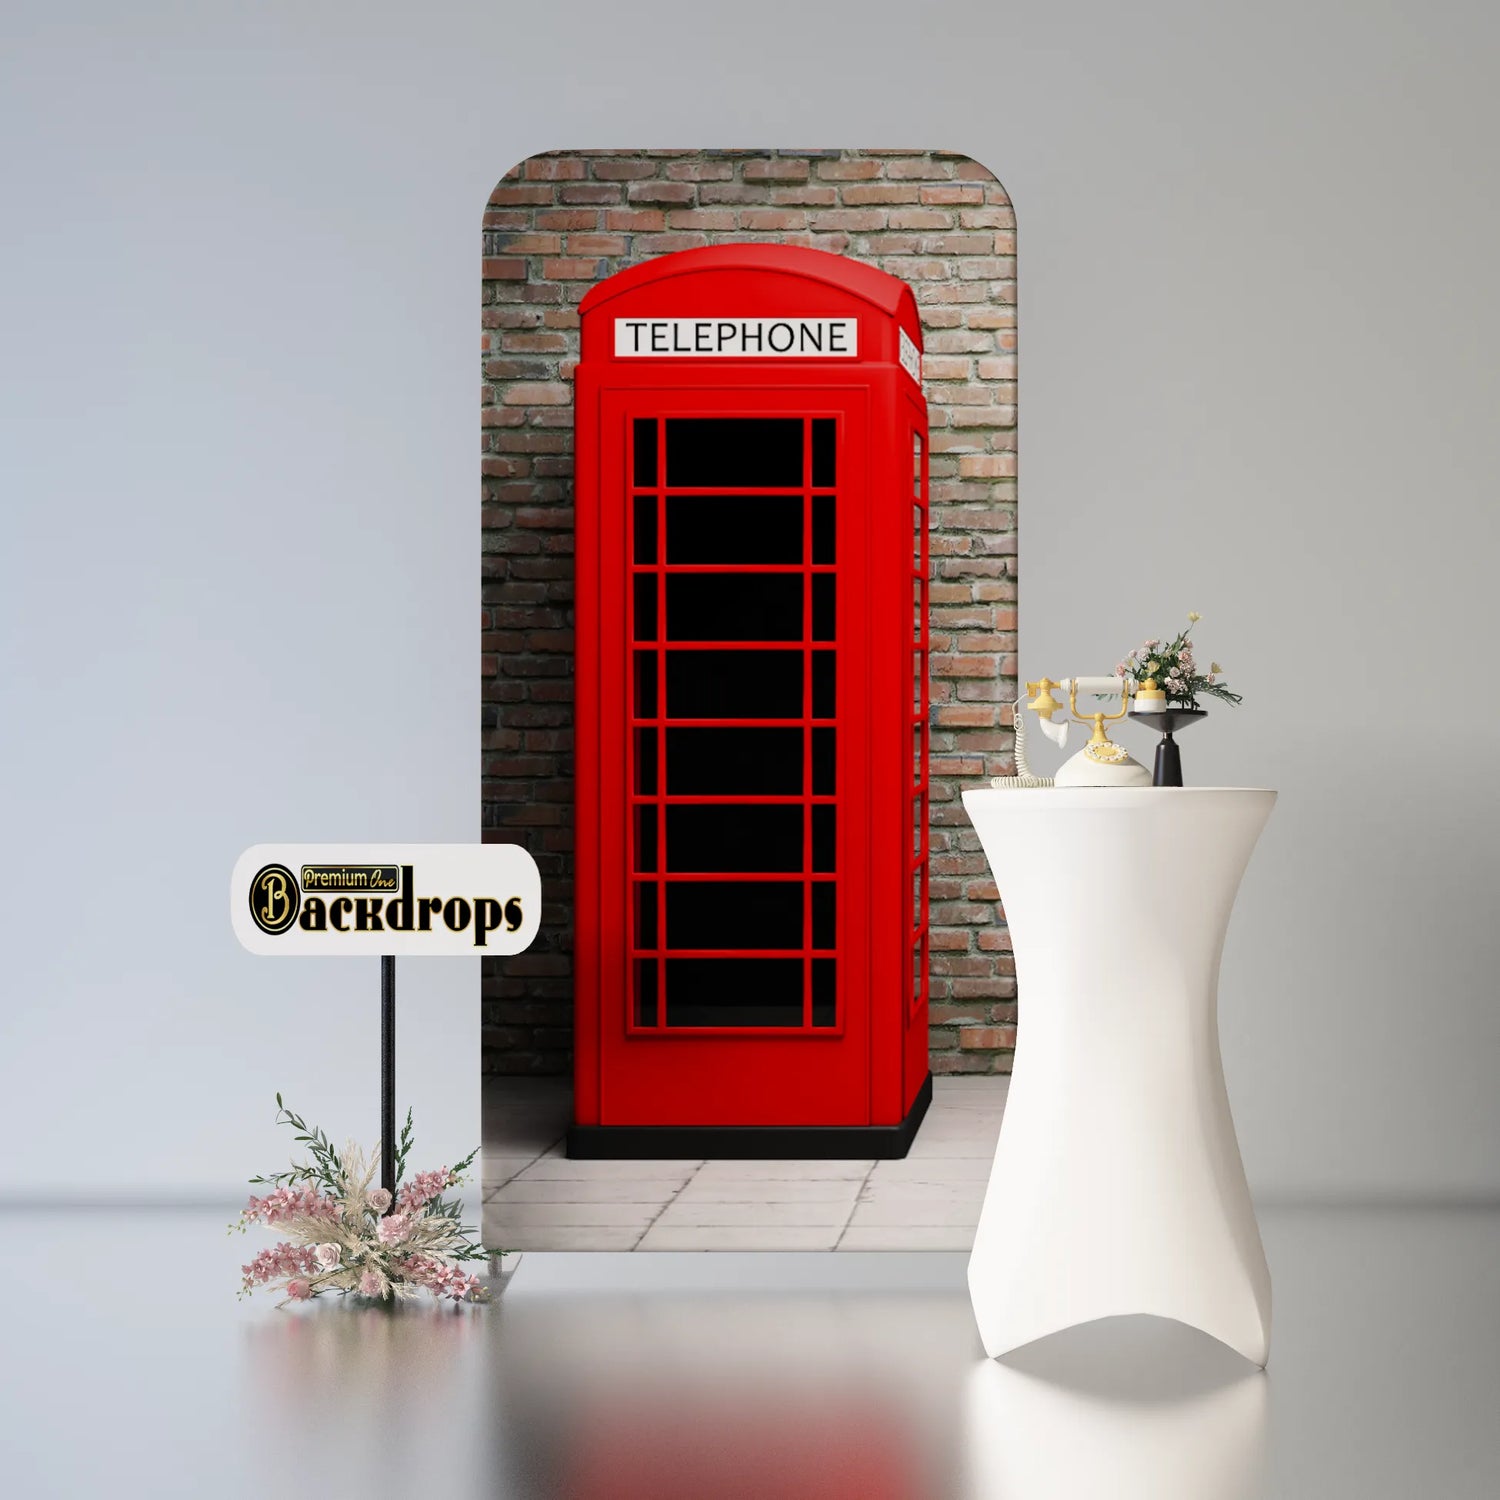 Telephone Booth Design 28